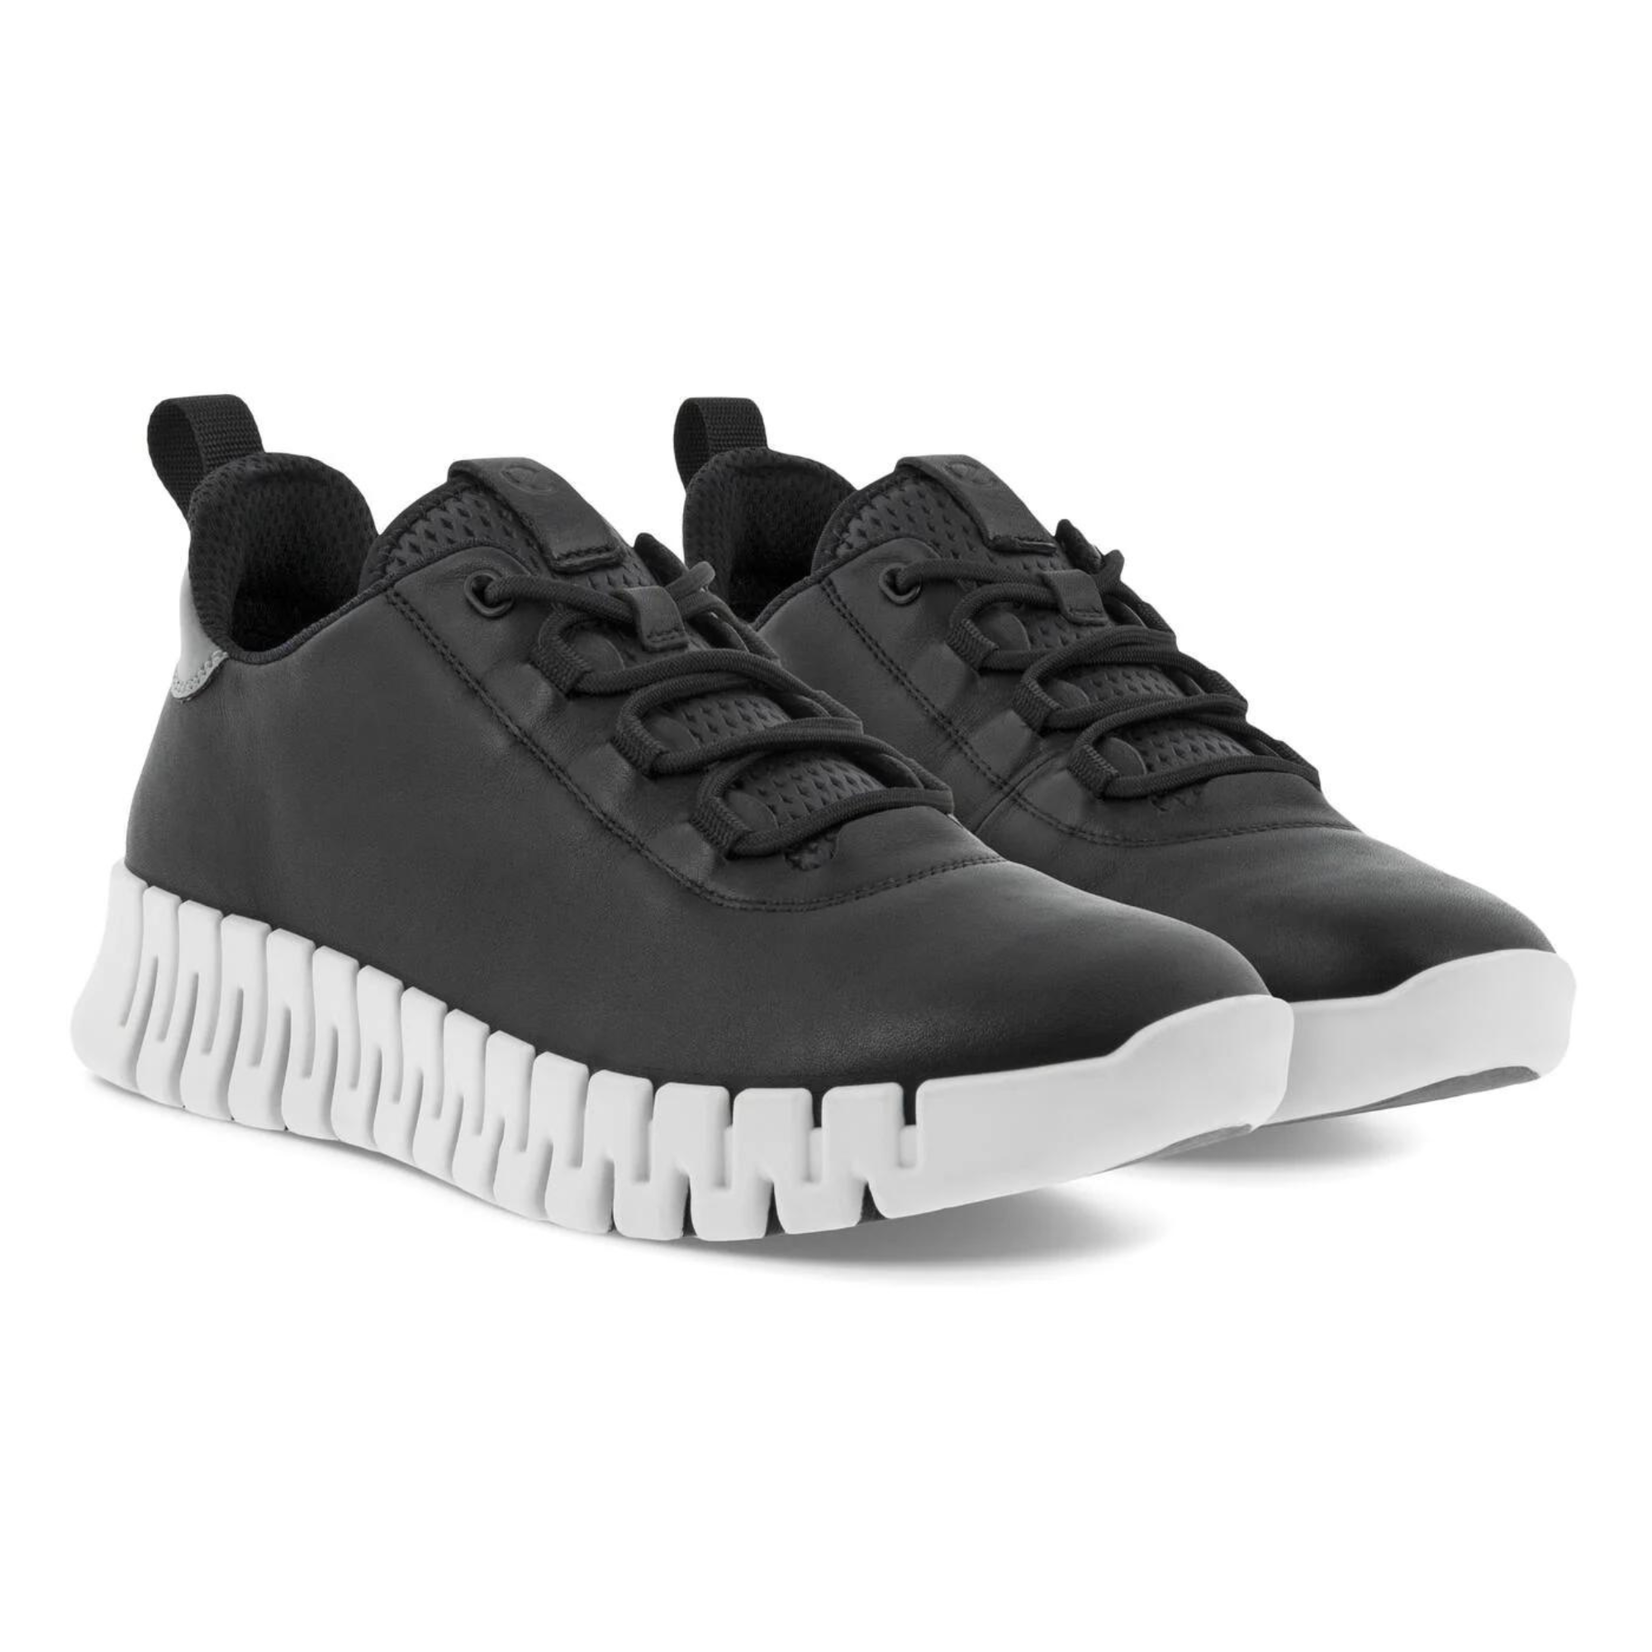 Ecco Gruuv Sneaker Black/Light Grey 218203 60719